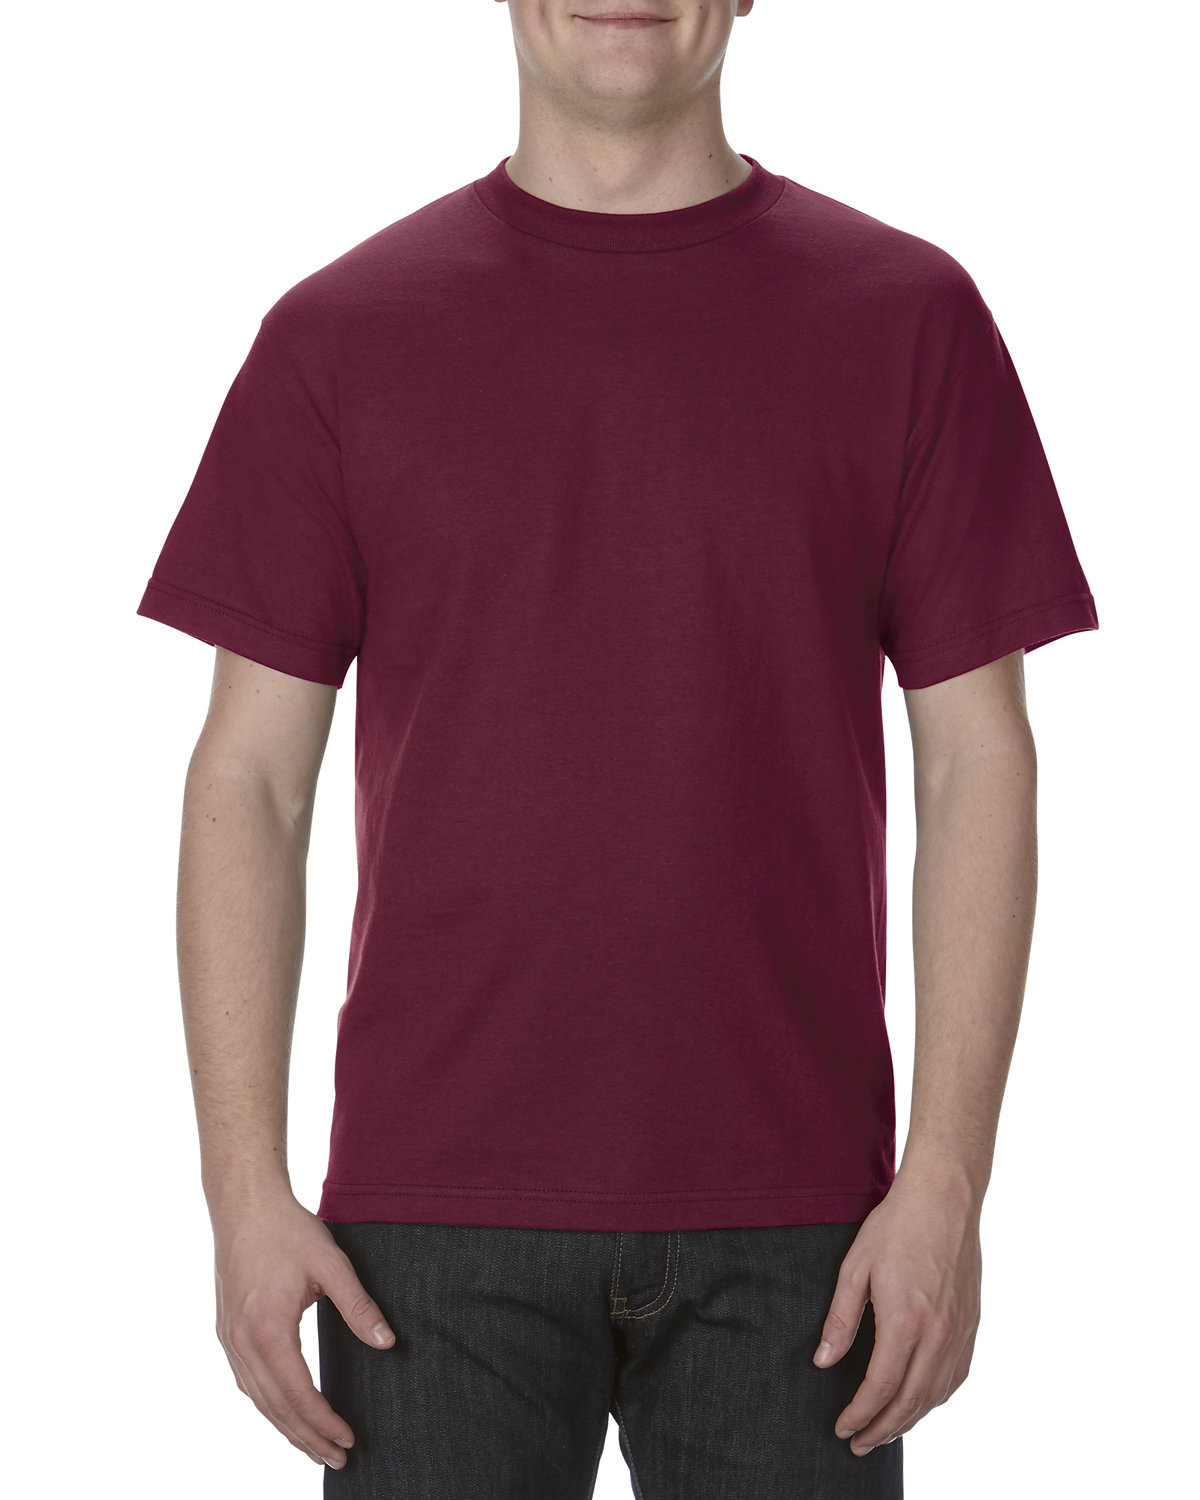 American Apparel Adult 6.0 oz., 100% Cotton T-Shirt BURGUNDY 